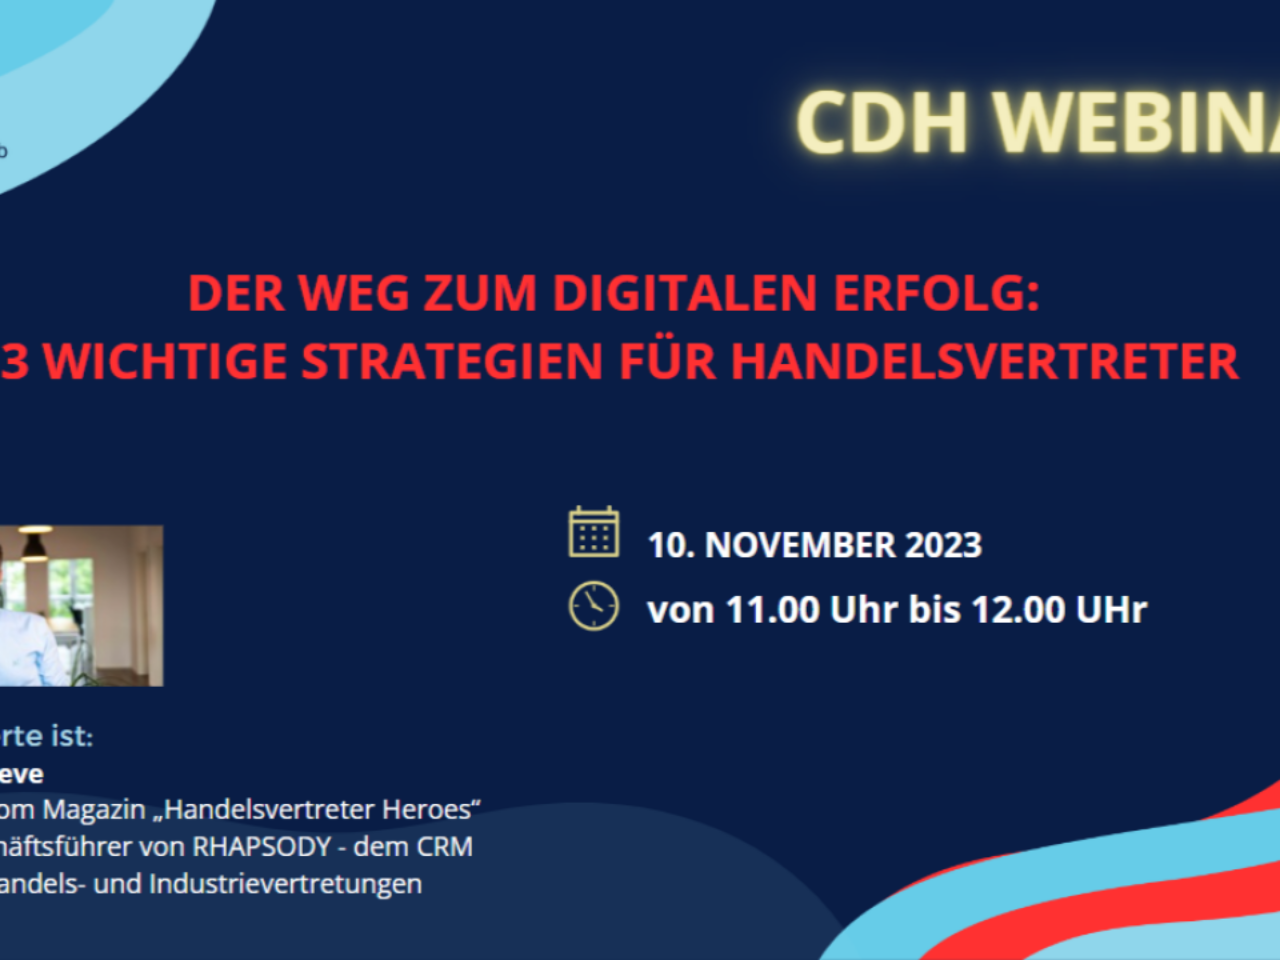 CDH Webinar mit André Keeve: Digitaler Erfolg für Handelsvertreter